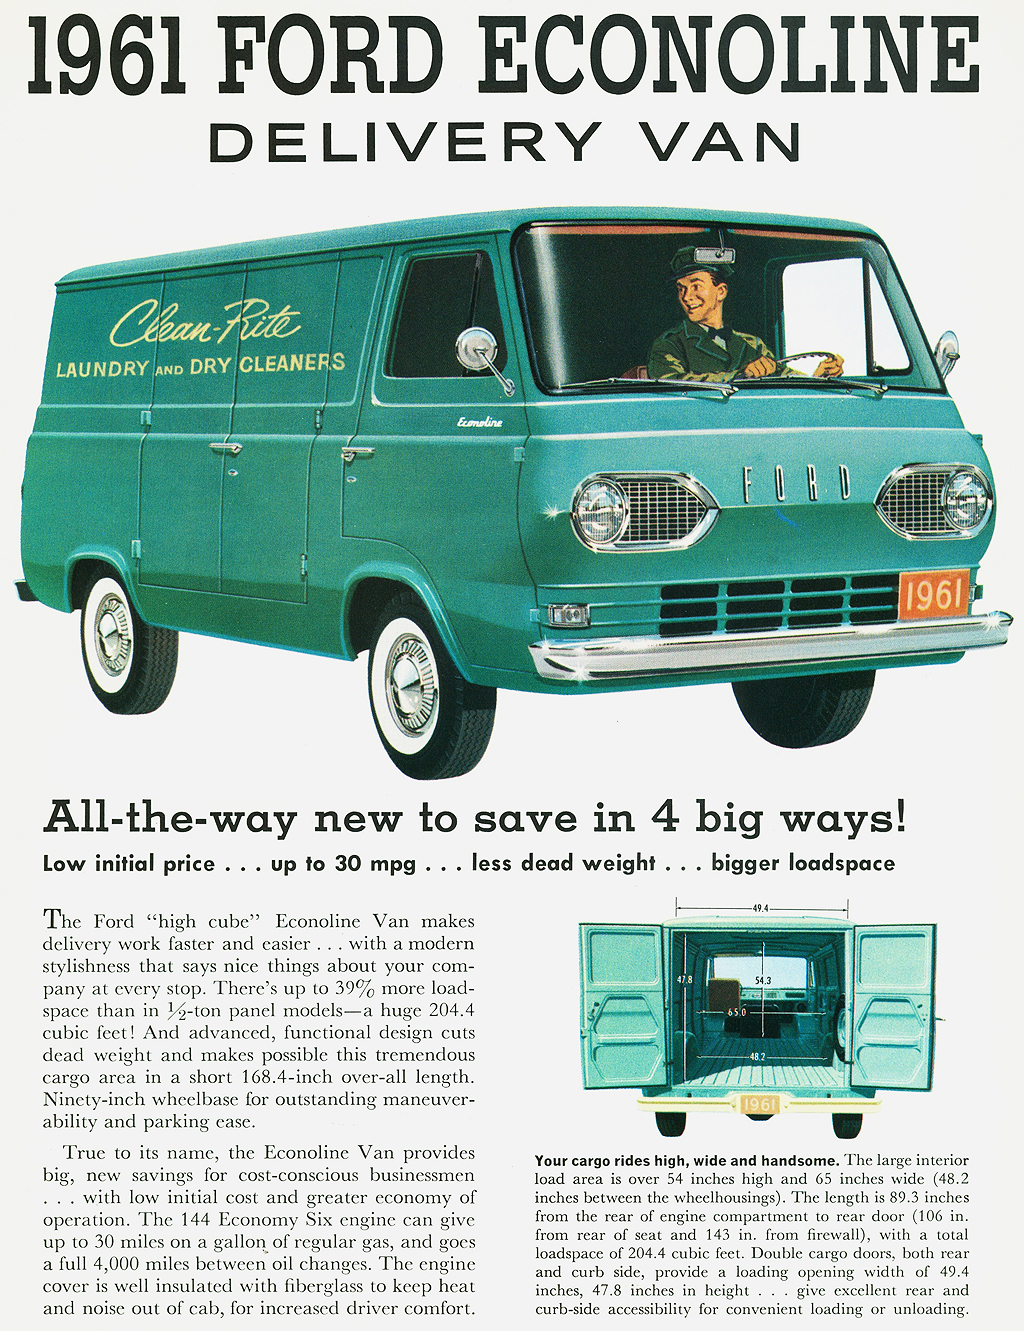 1961 Ford Econoline delivery van